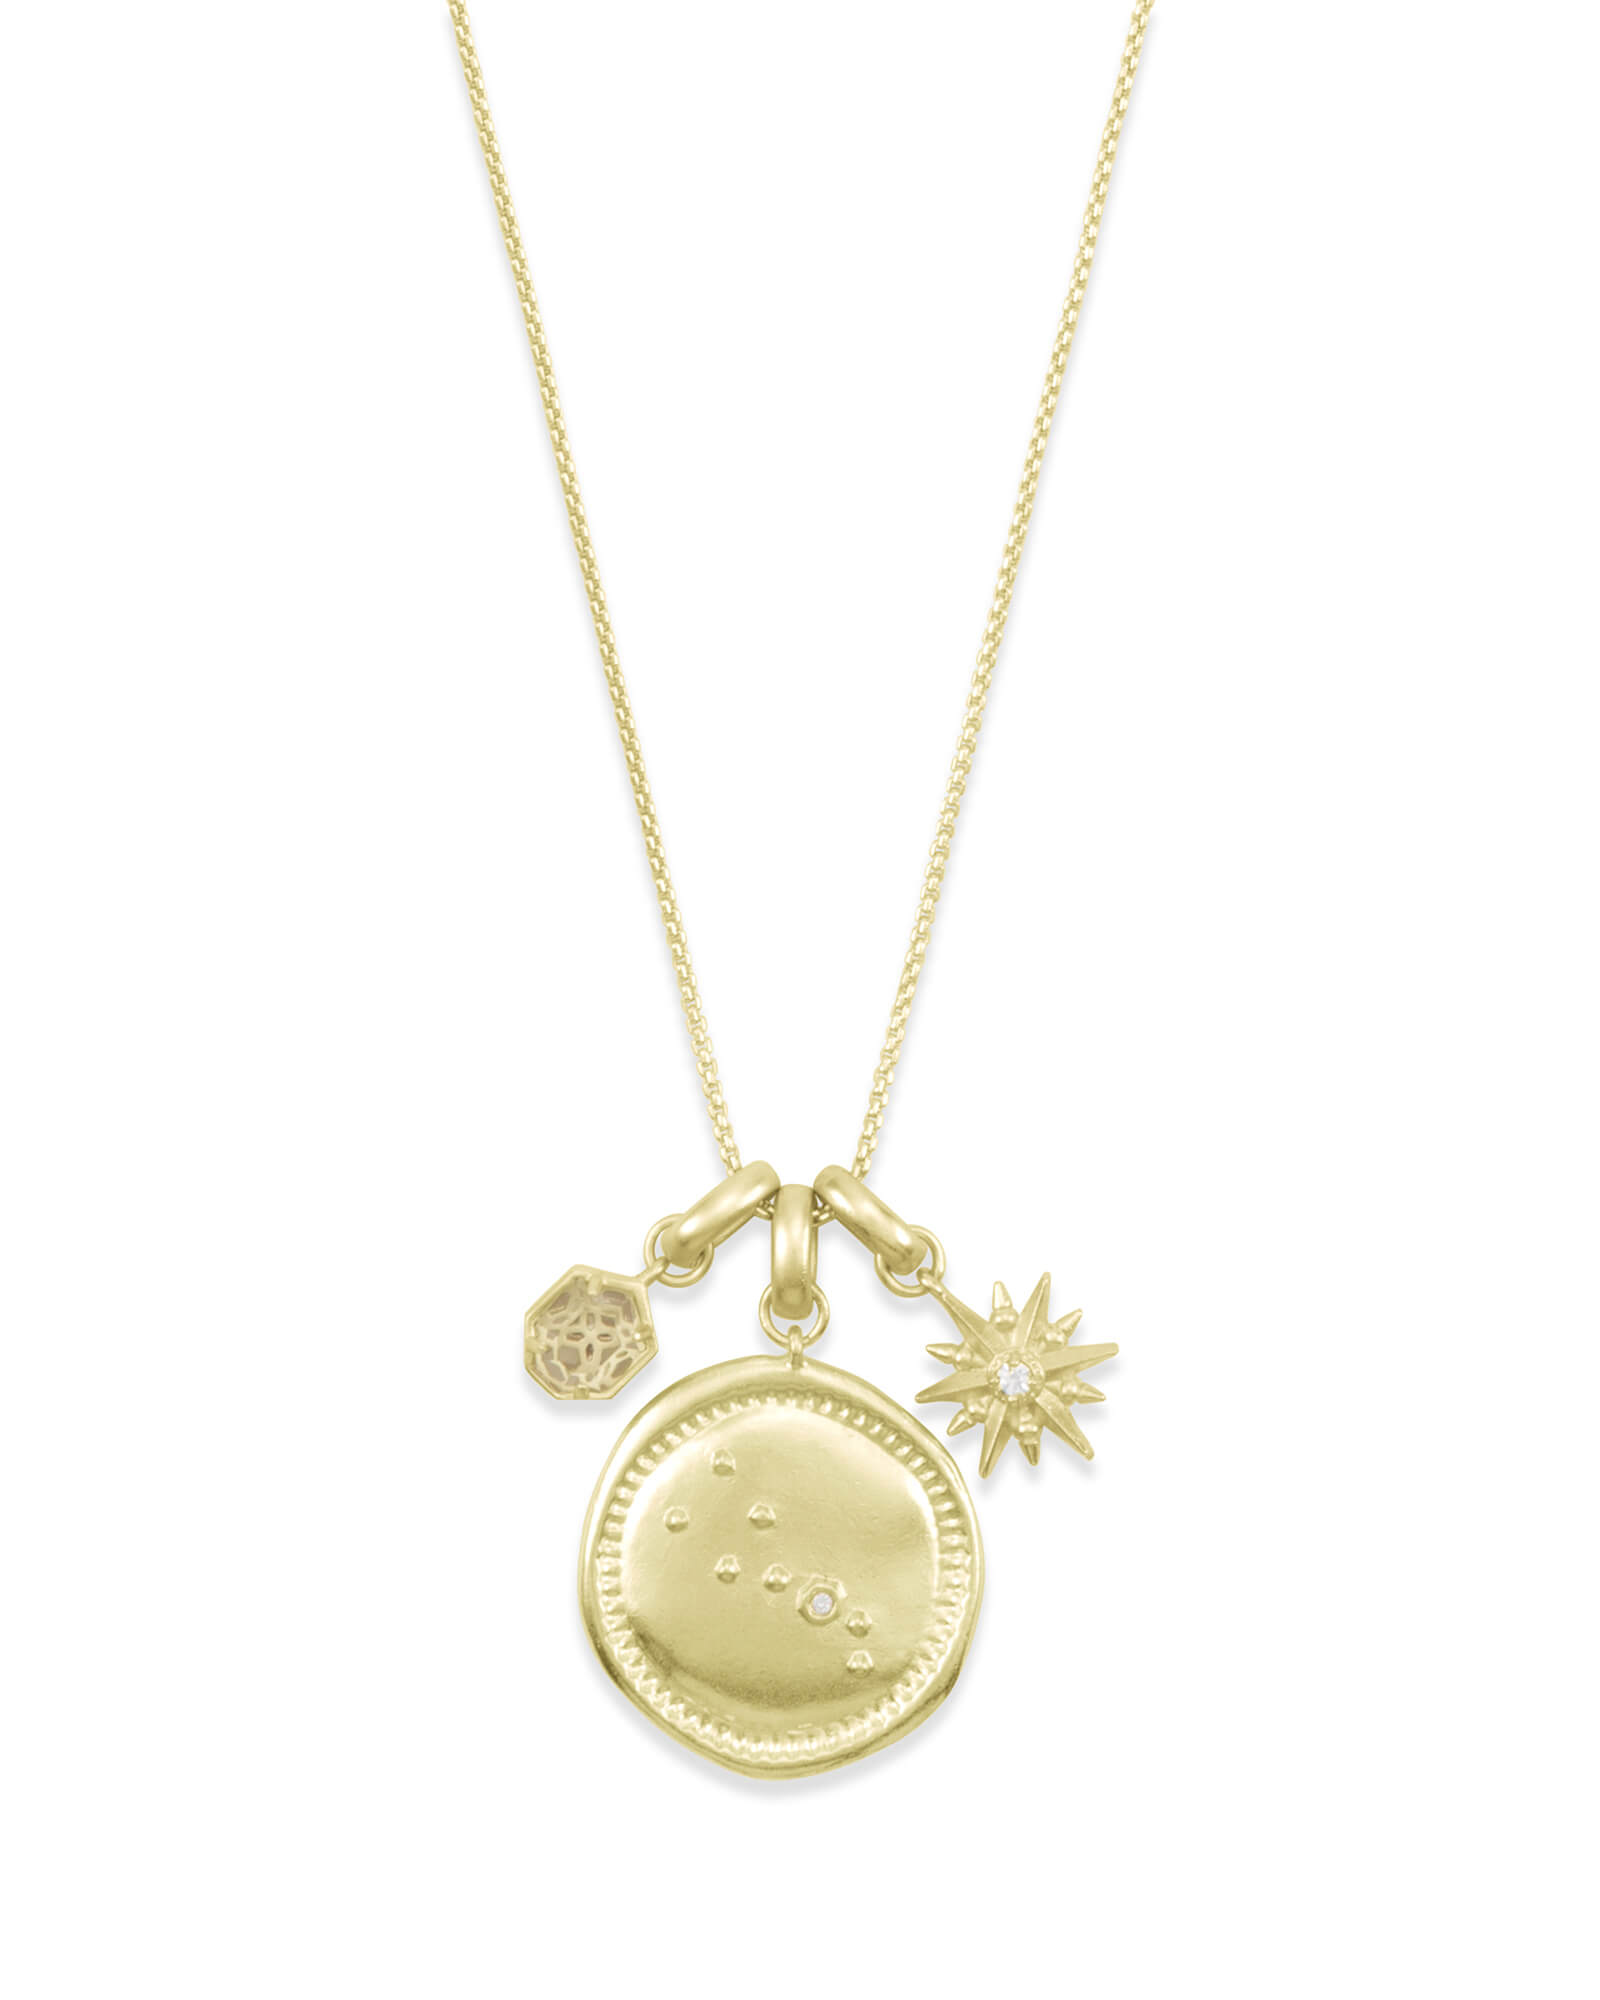 April Taurus Charm Necklace Set in Gold | Kendra Scott